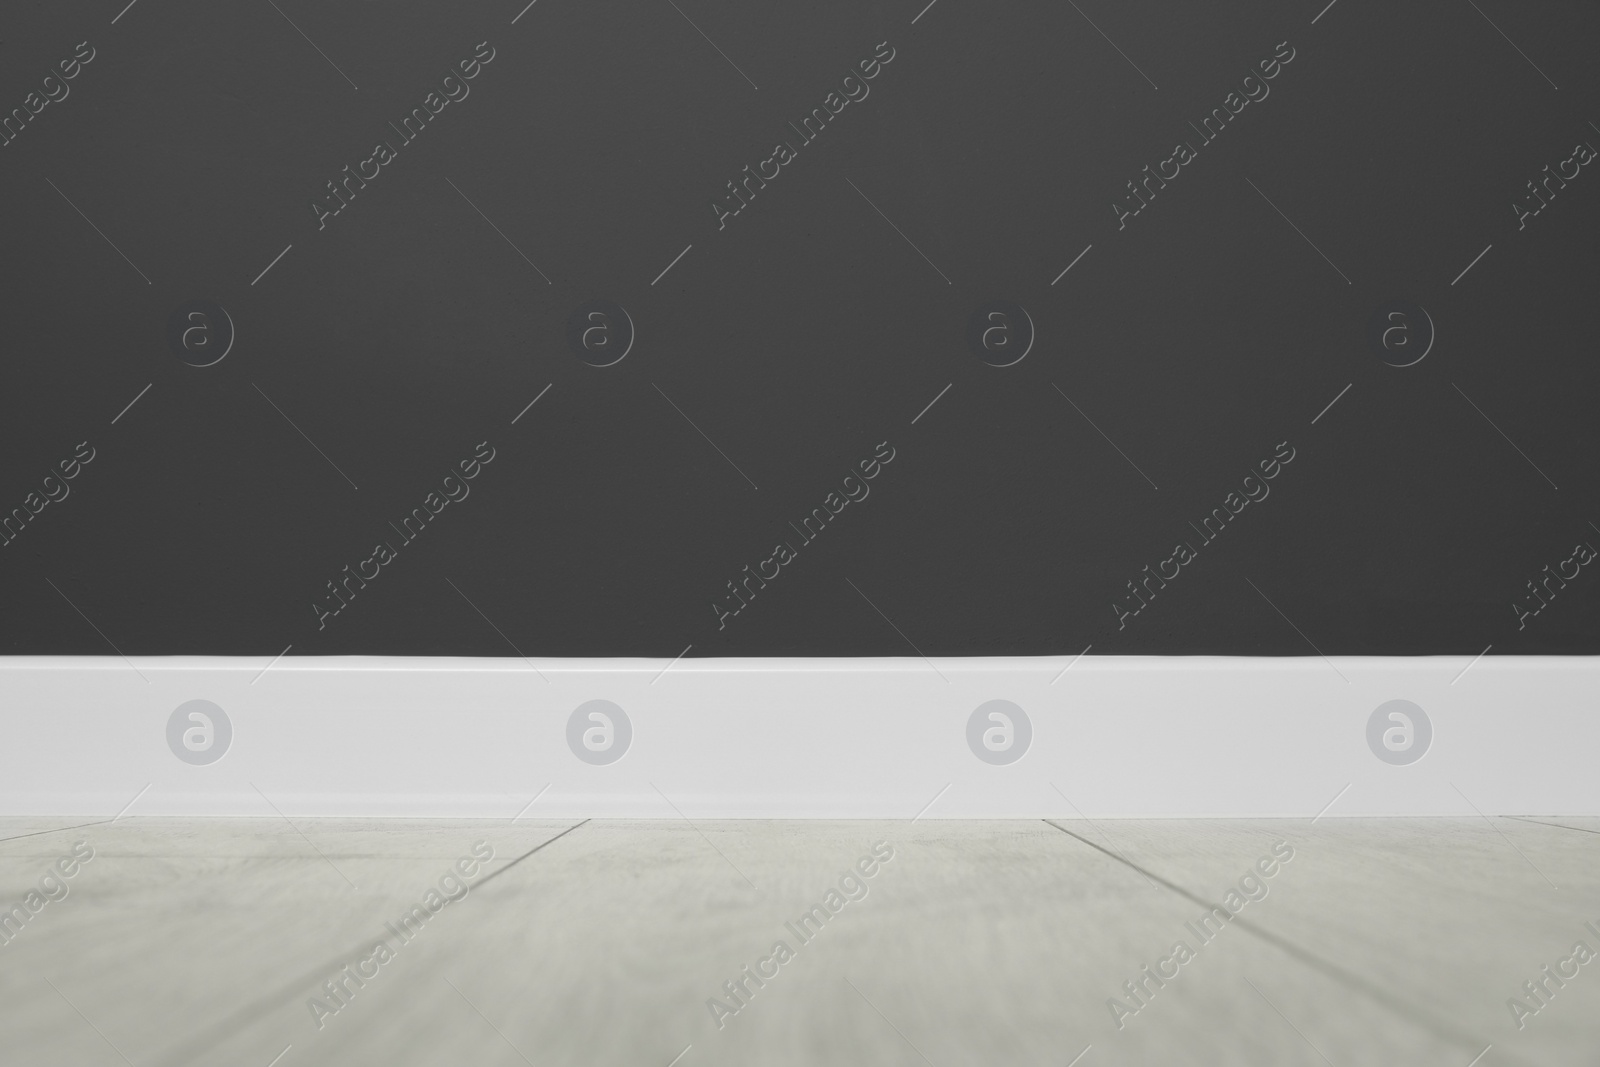 Photo of White plinth on laminated floor near black wall indoors